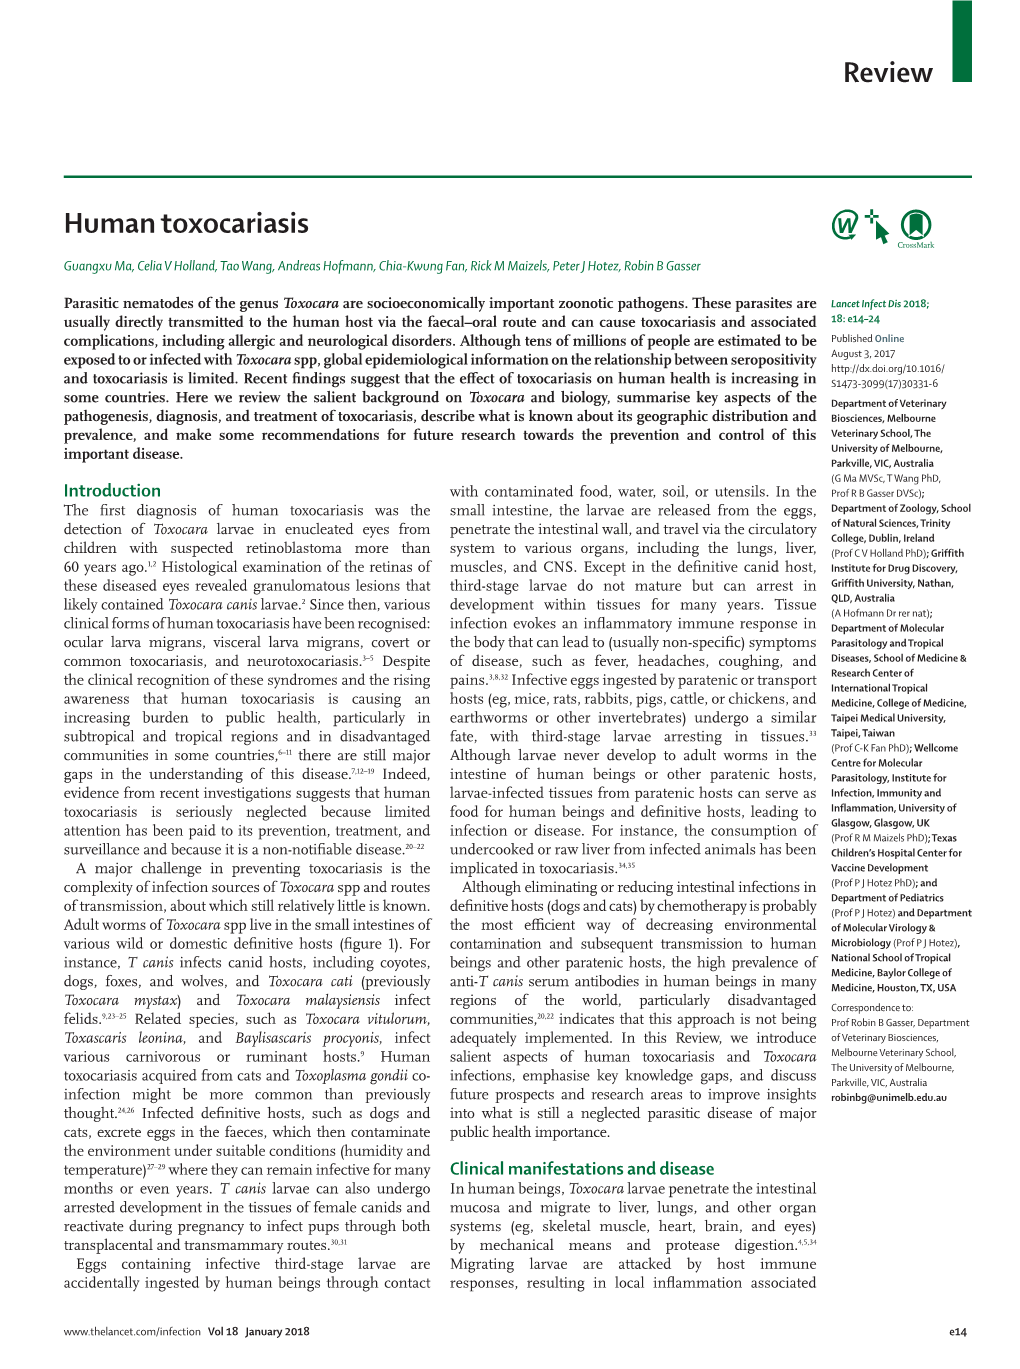 Review Human Toxocariasis